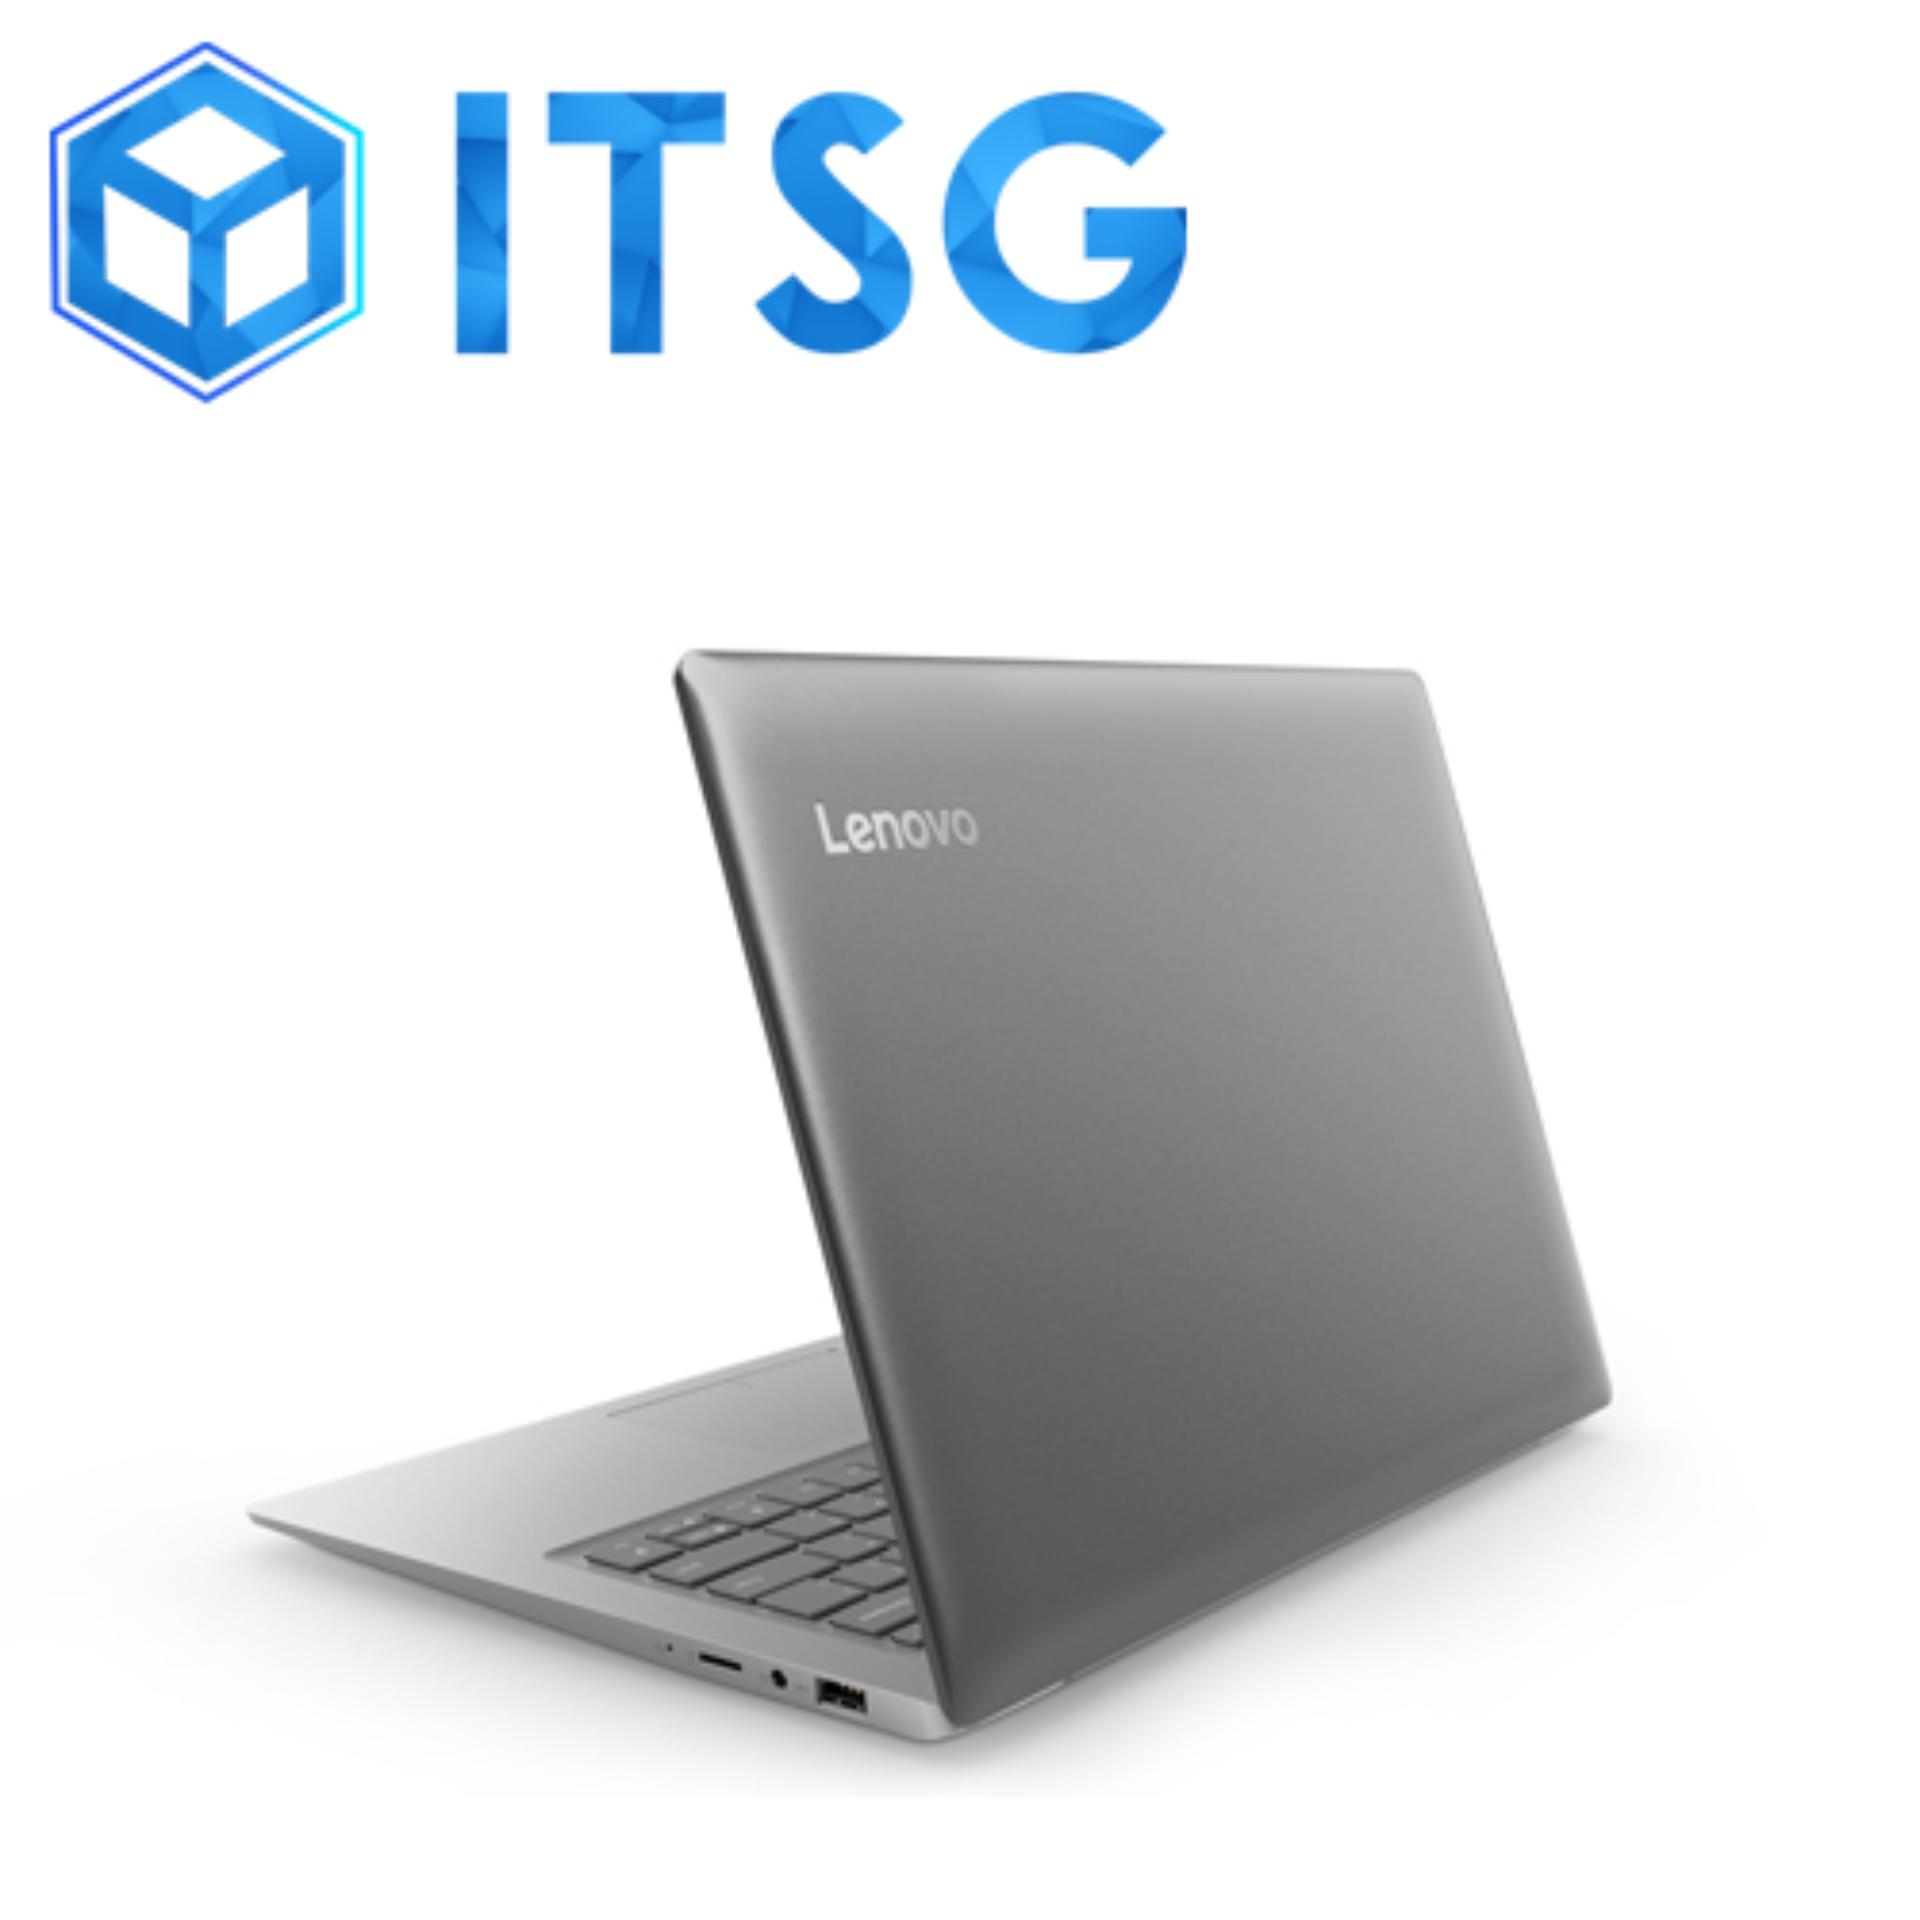 Lenovo IdeaPad 120S-14IAP (Mineral Grey) / Laptop / Notebook / Workstation / 14″ / AIO / Computer